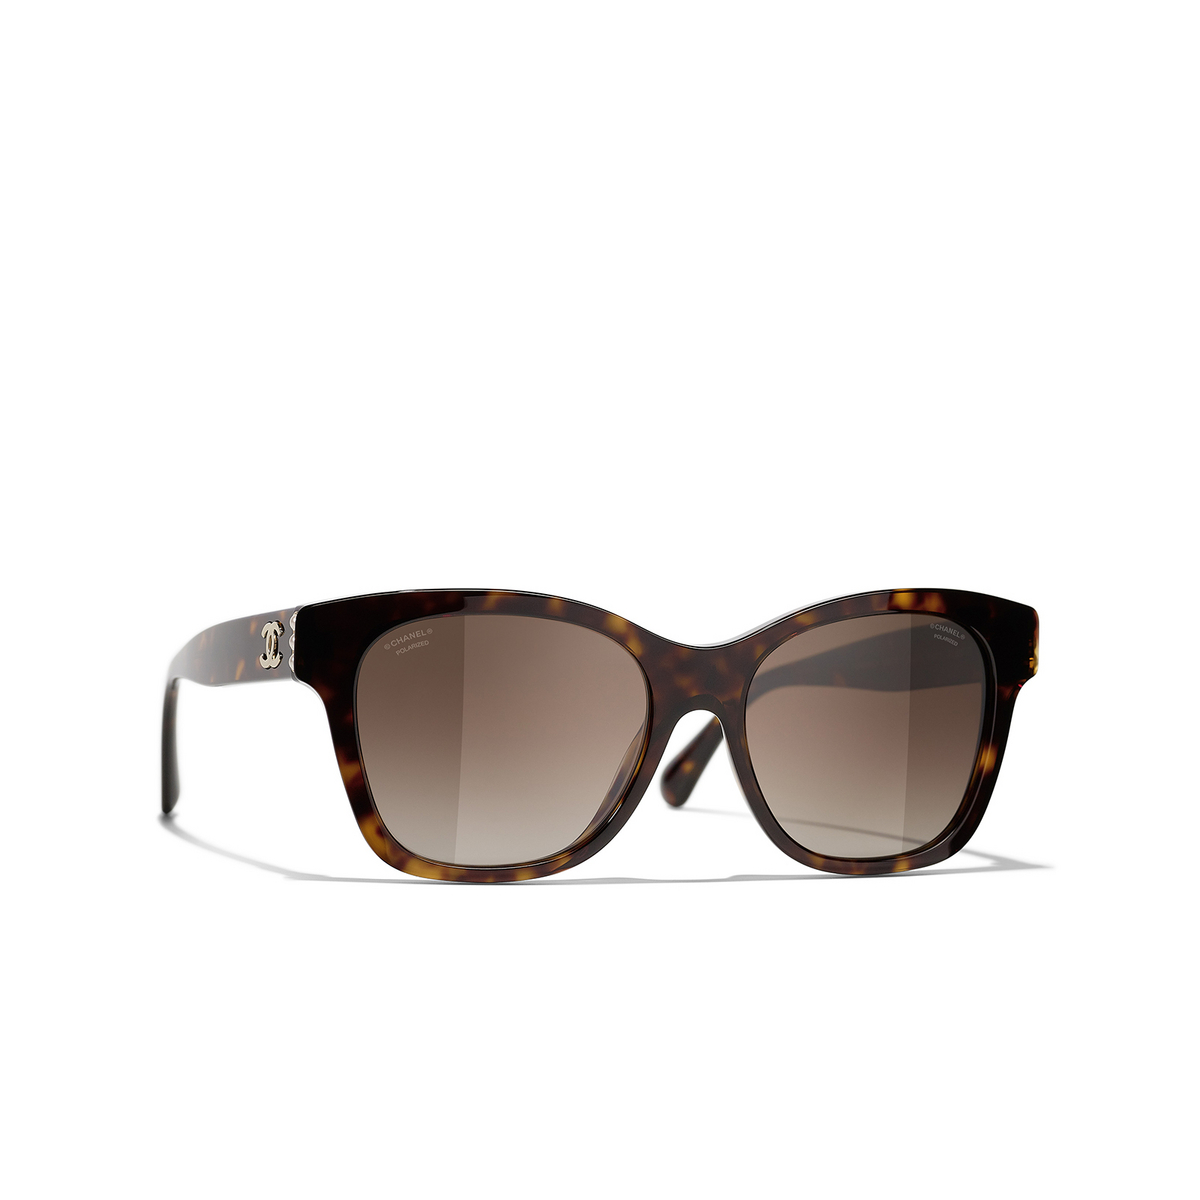 CHANEL square Sunglasses C714S9 Dark Tortoise